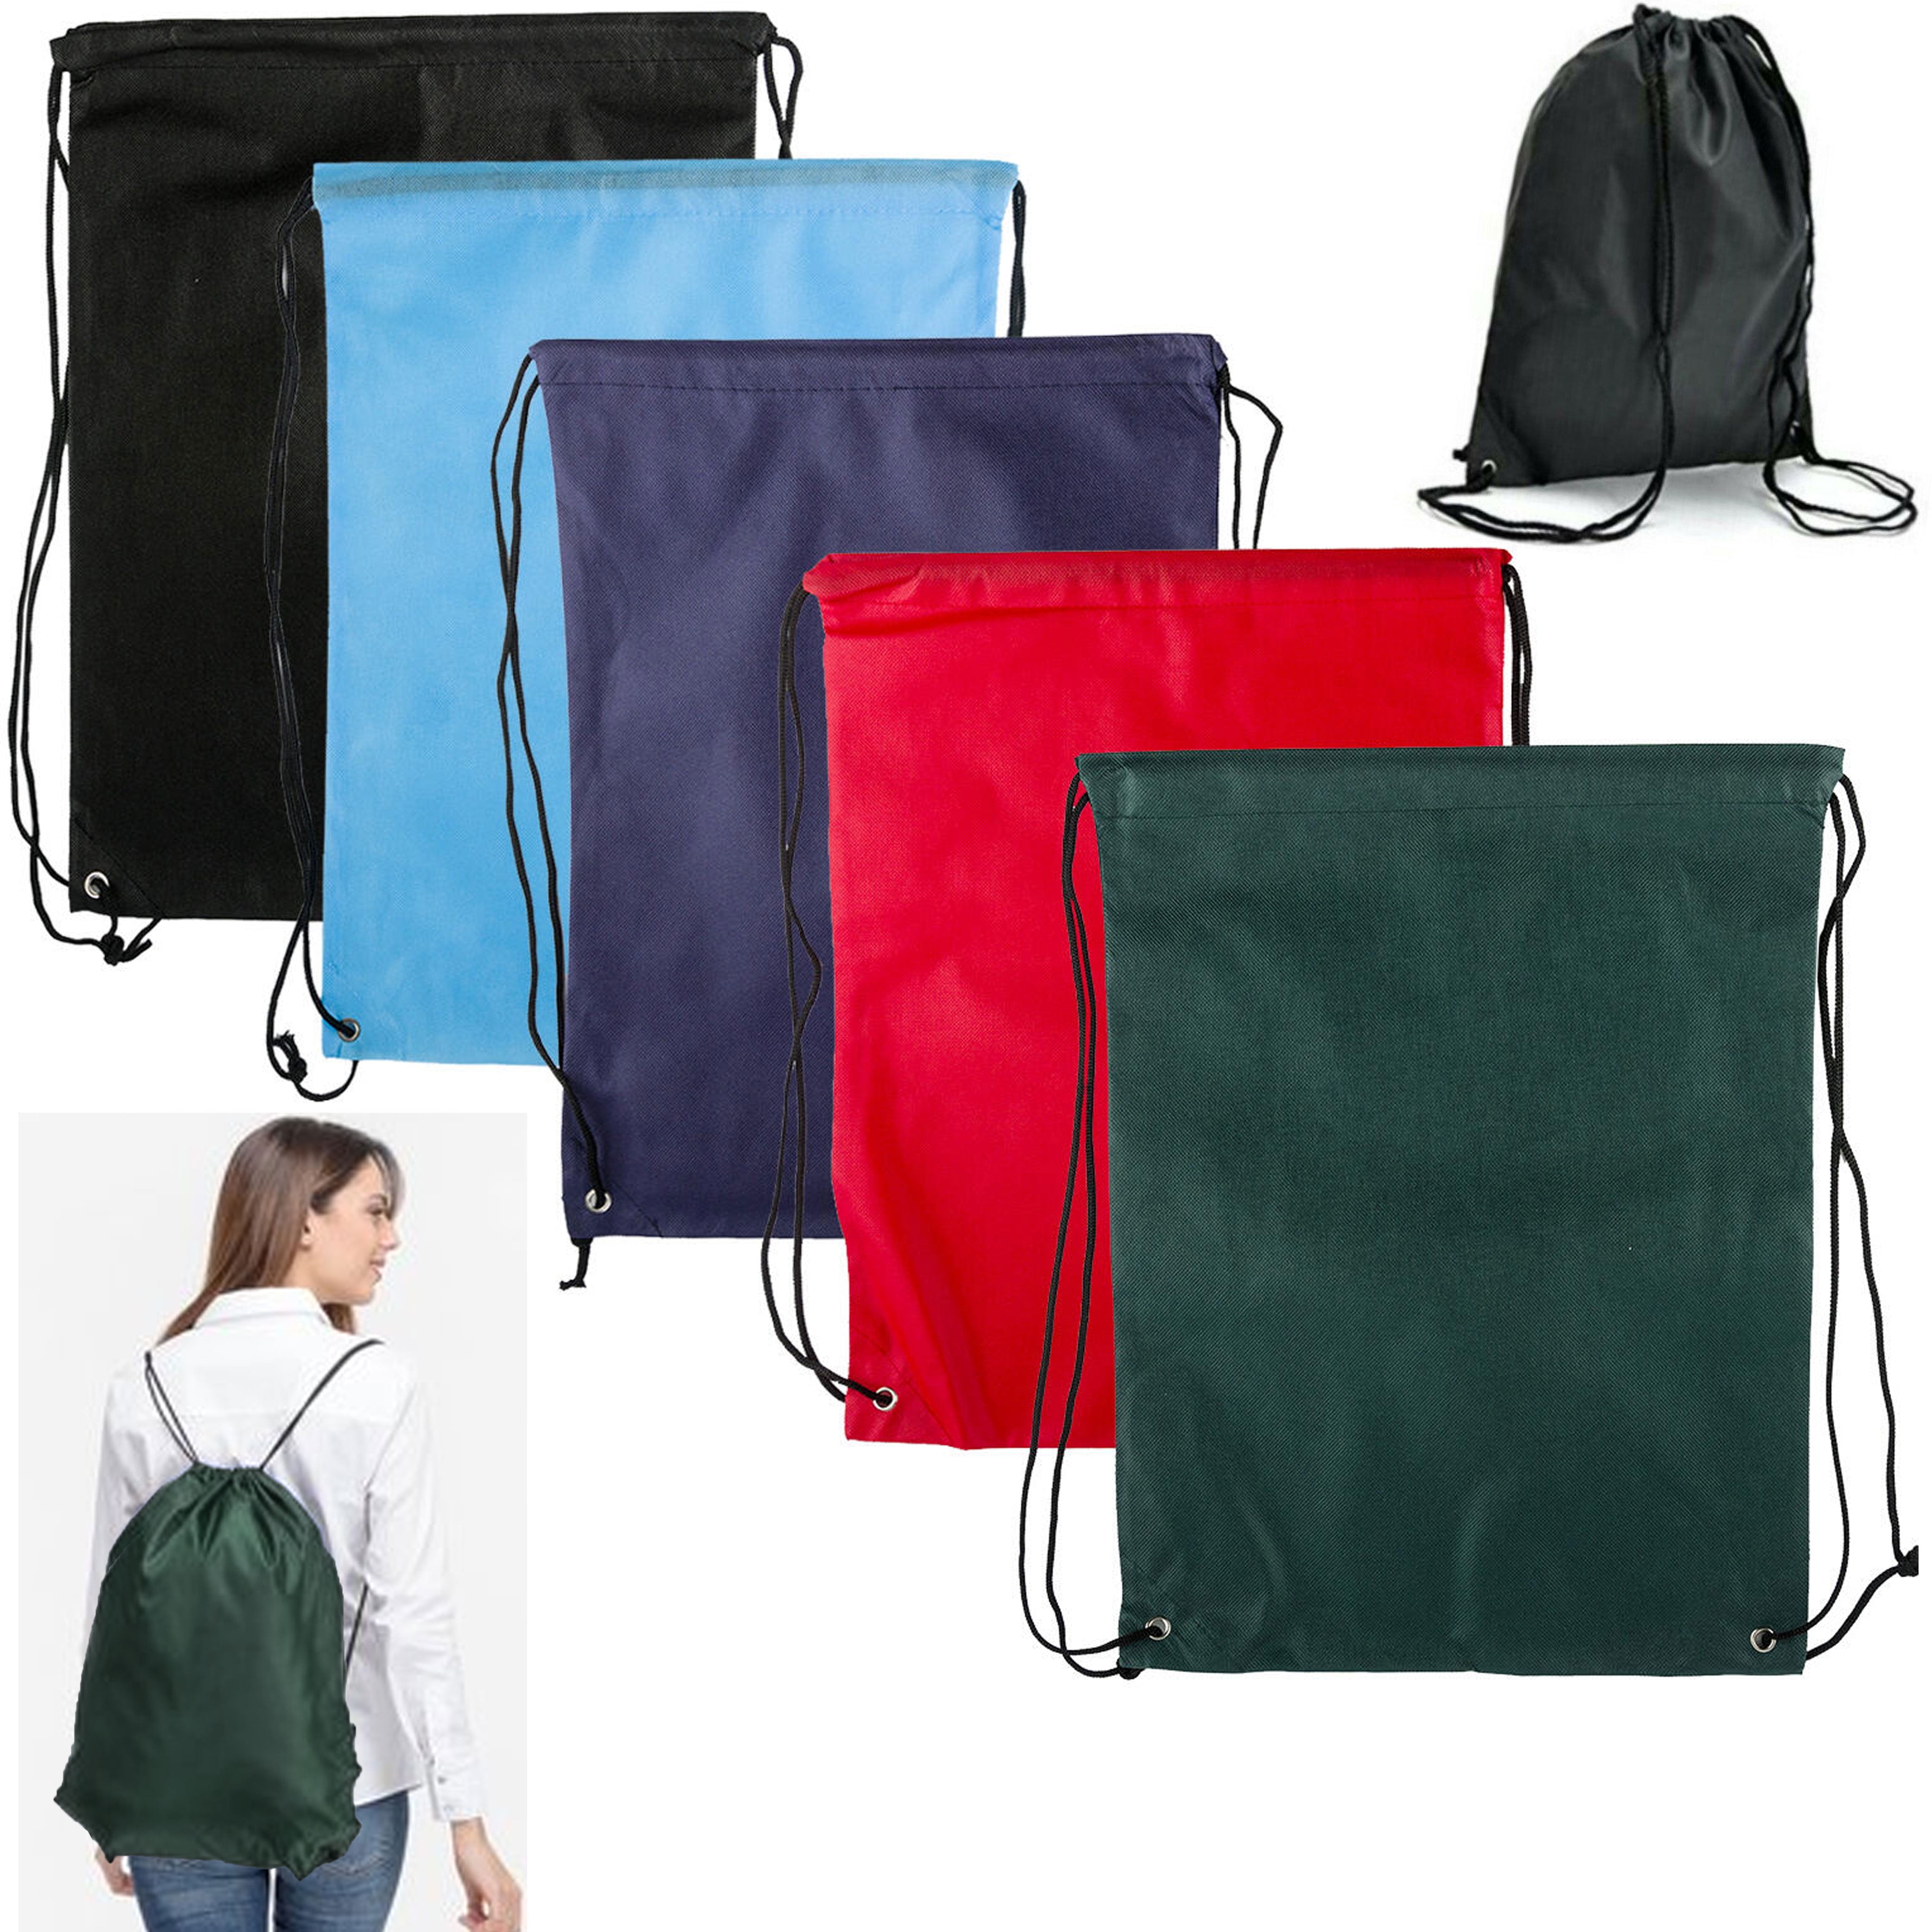 String Drawstring Backpack Cinch Sack Gym Tote Bag School Sport Daily Gym Pack